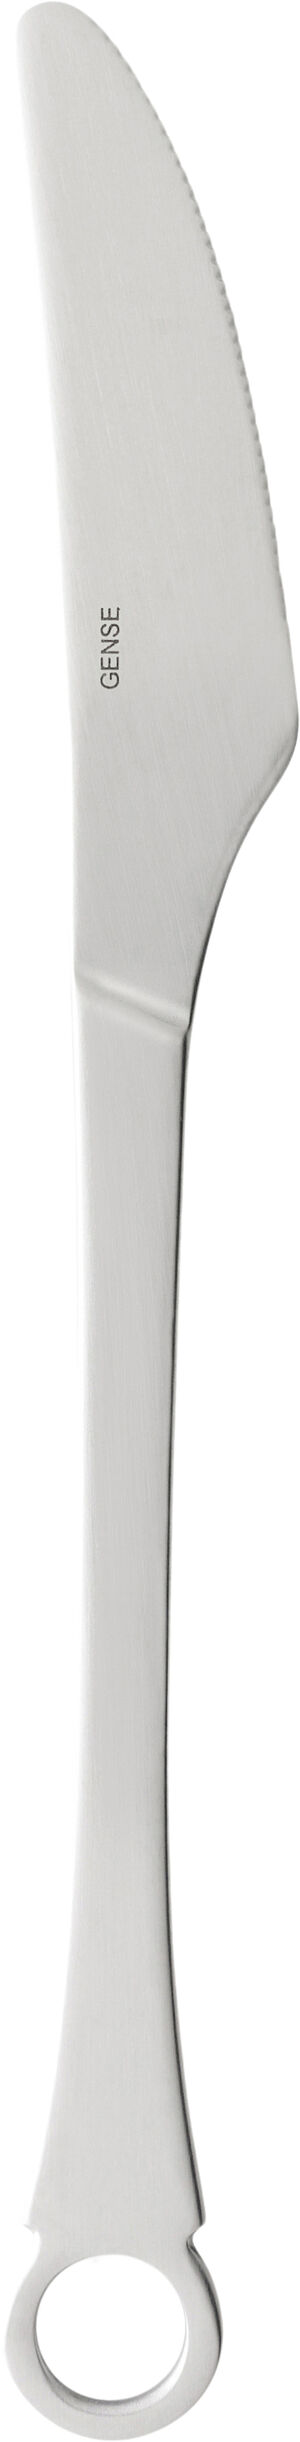 Pantry bordkniv mat stål L20,5cm